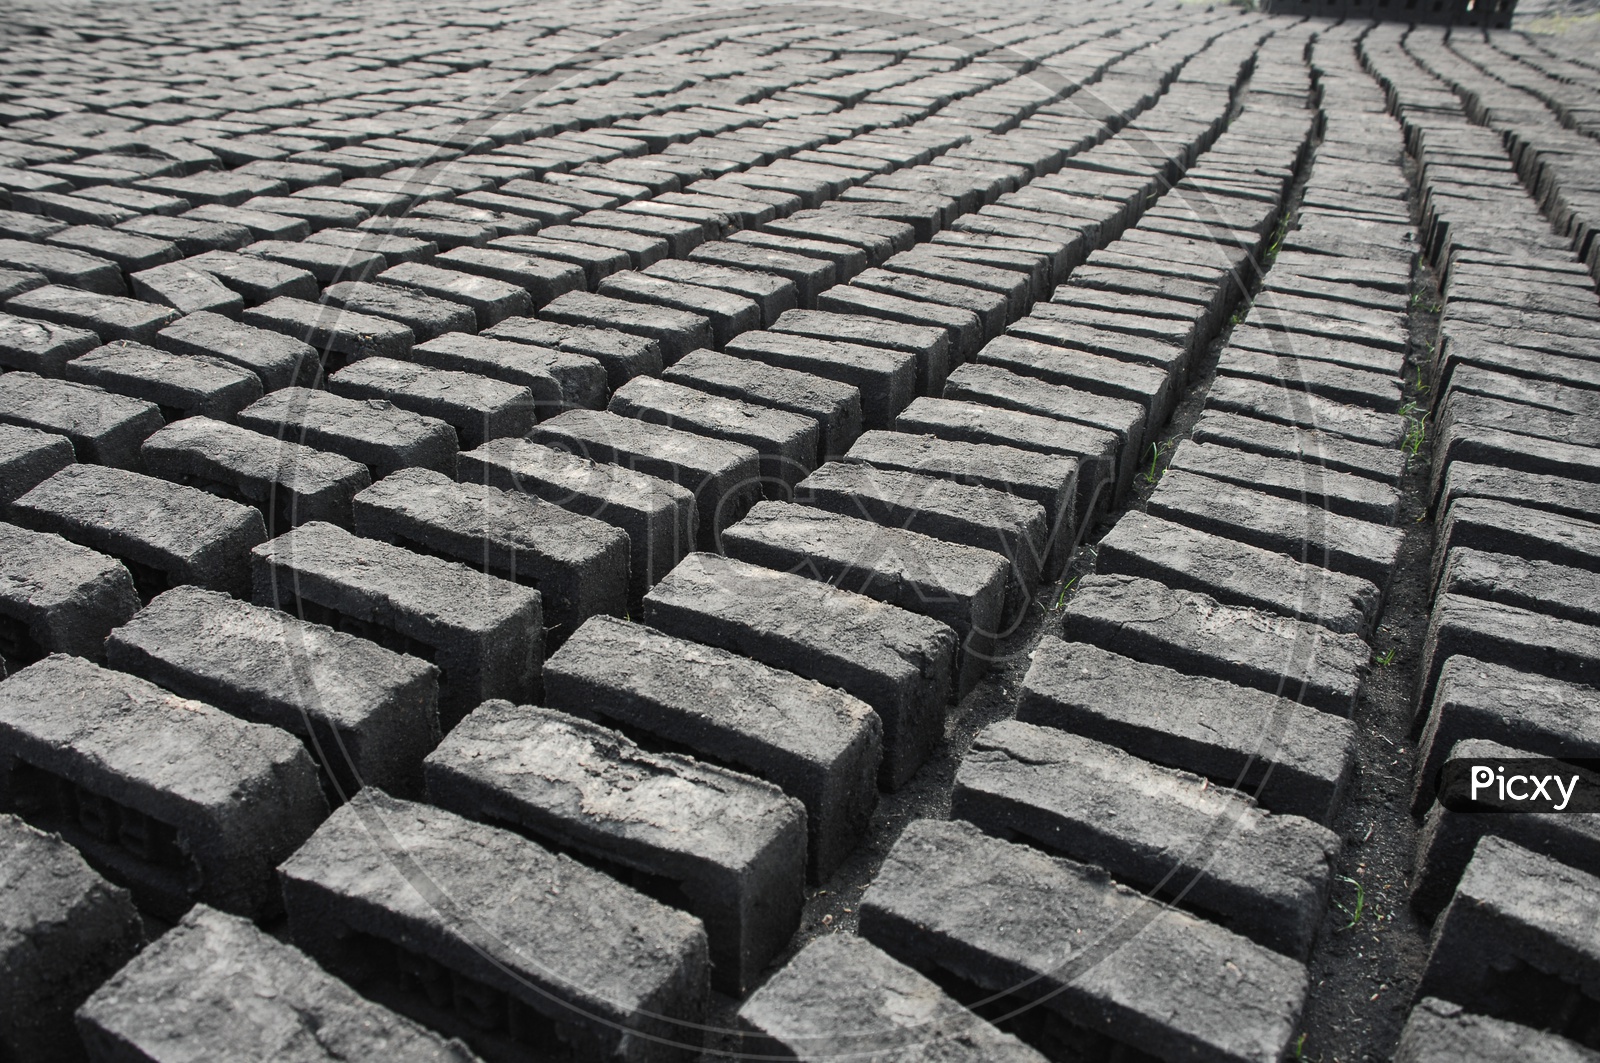 Close up of cement bricks